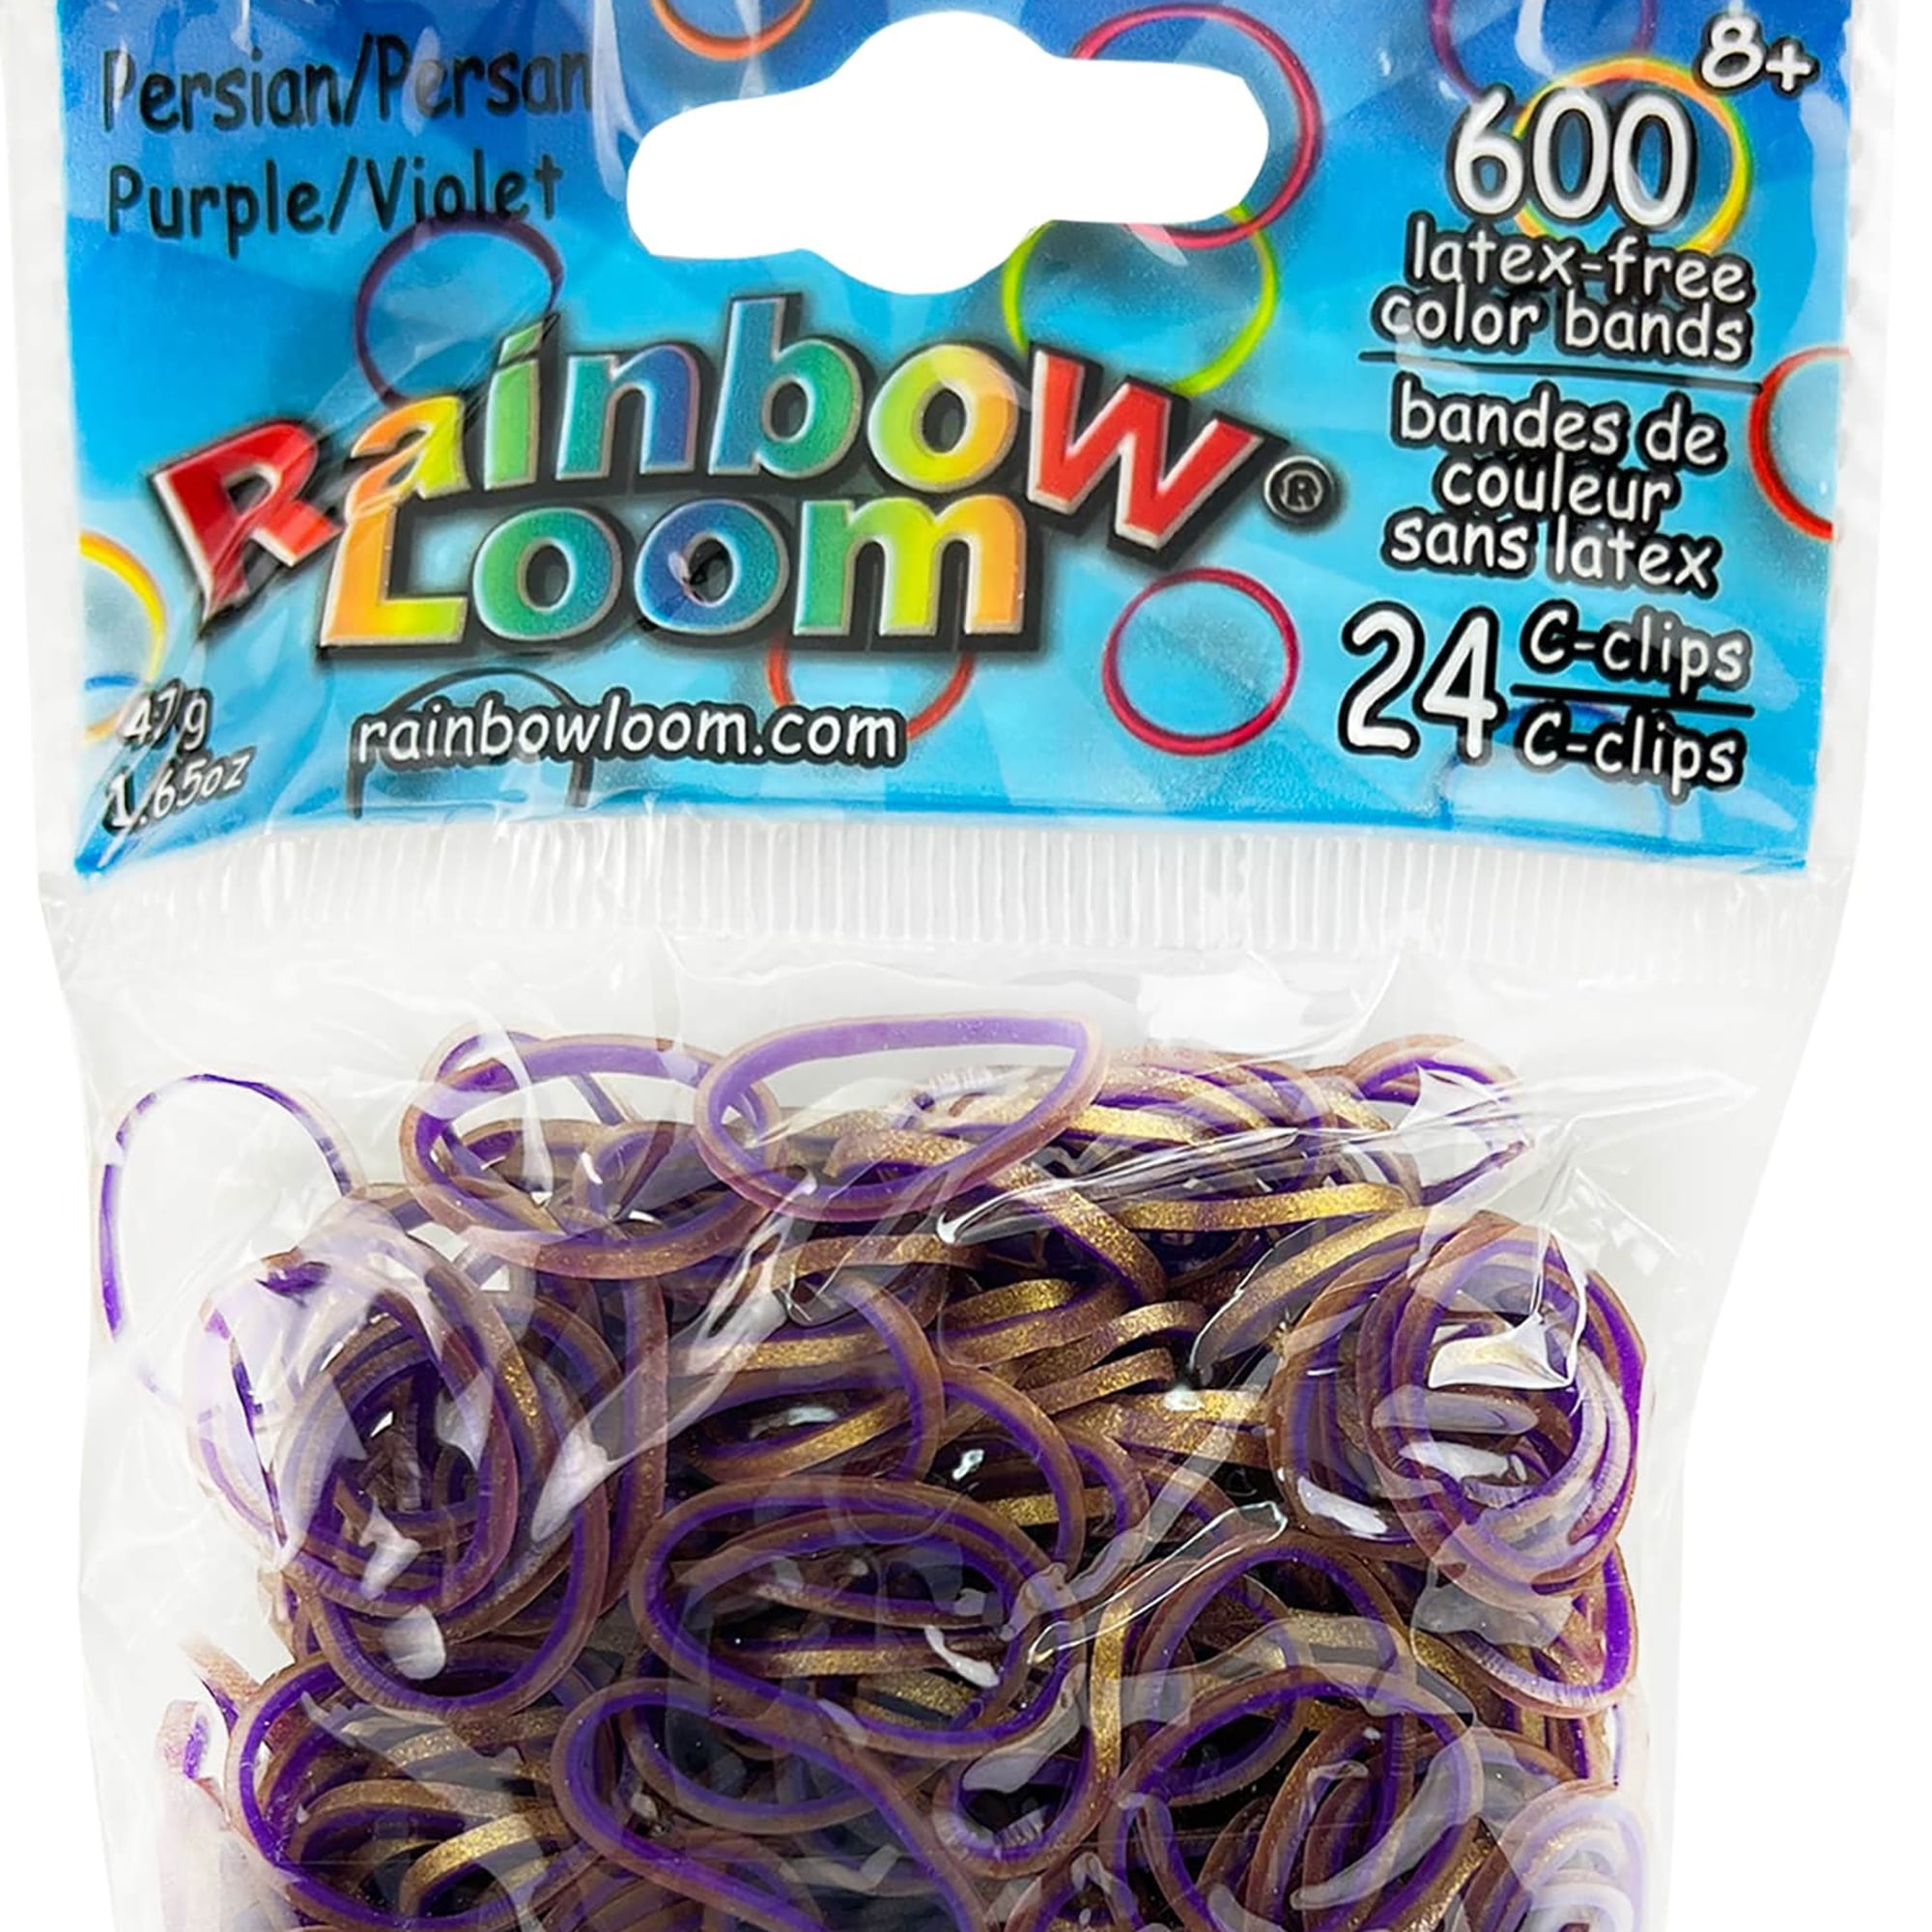 Rainbow Loom: Viviana Pearl Rubber Band Set